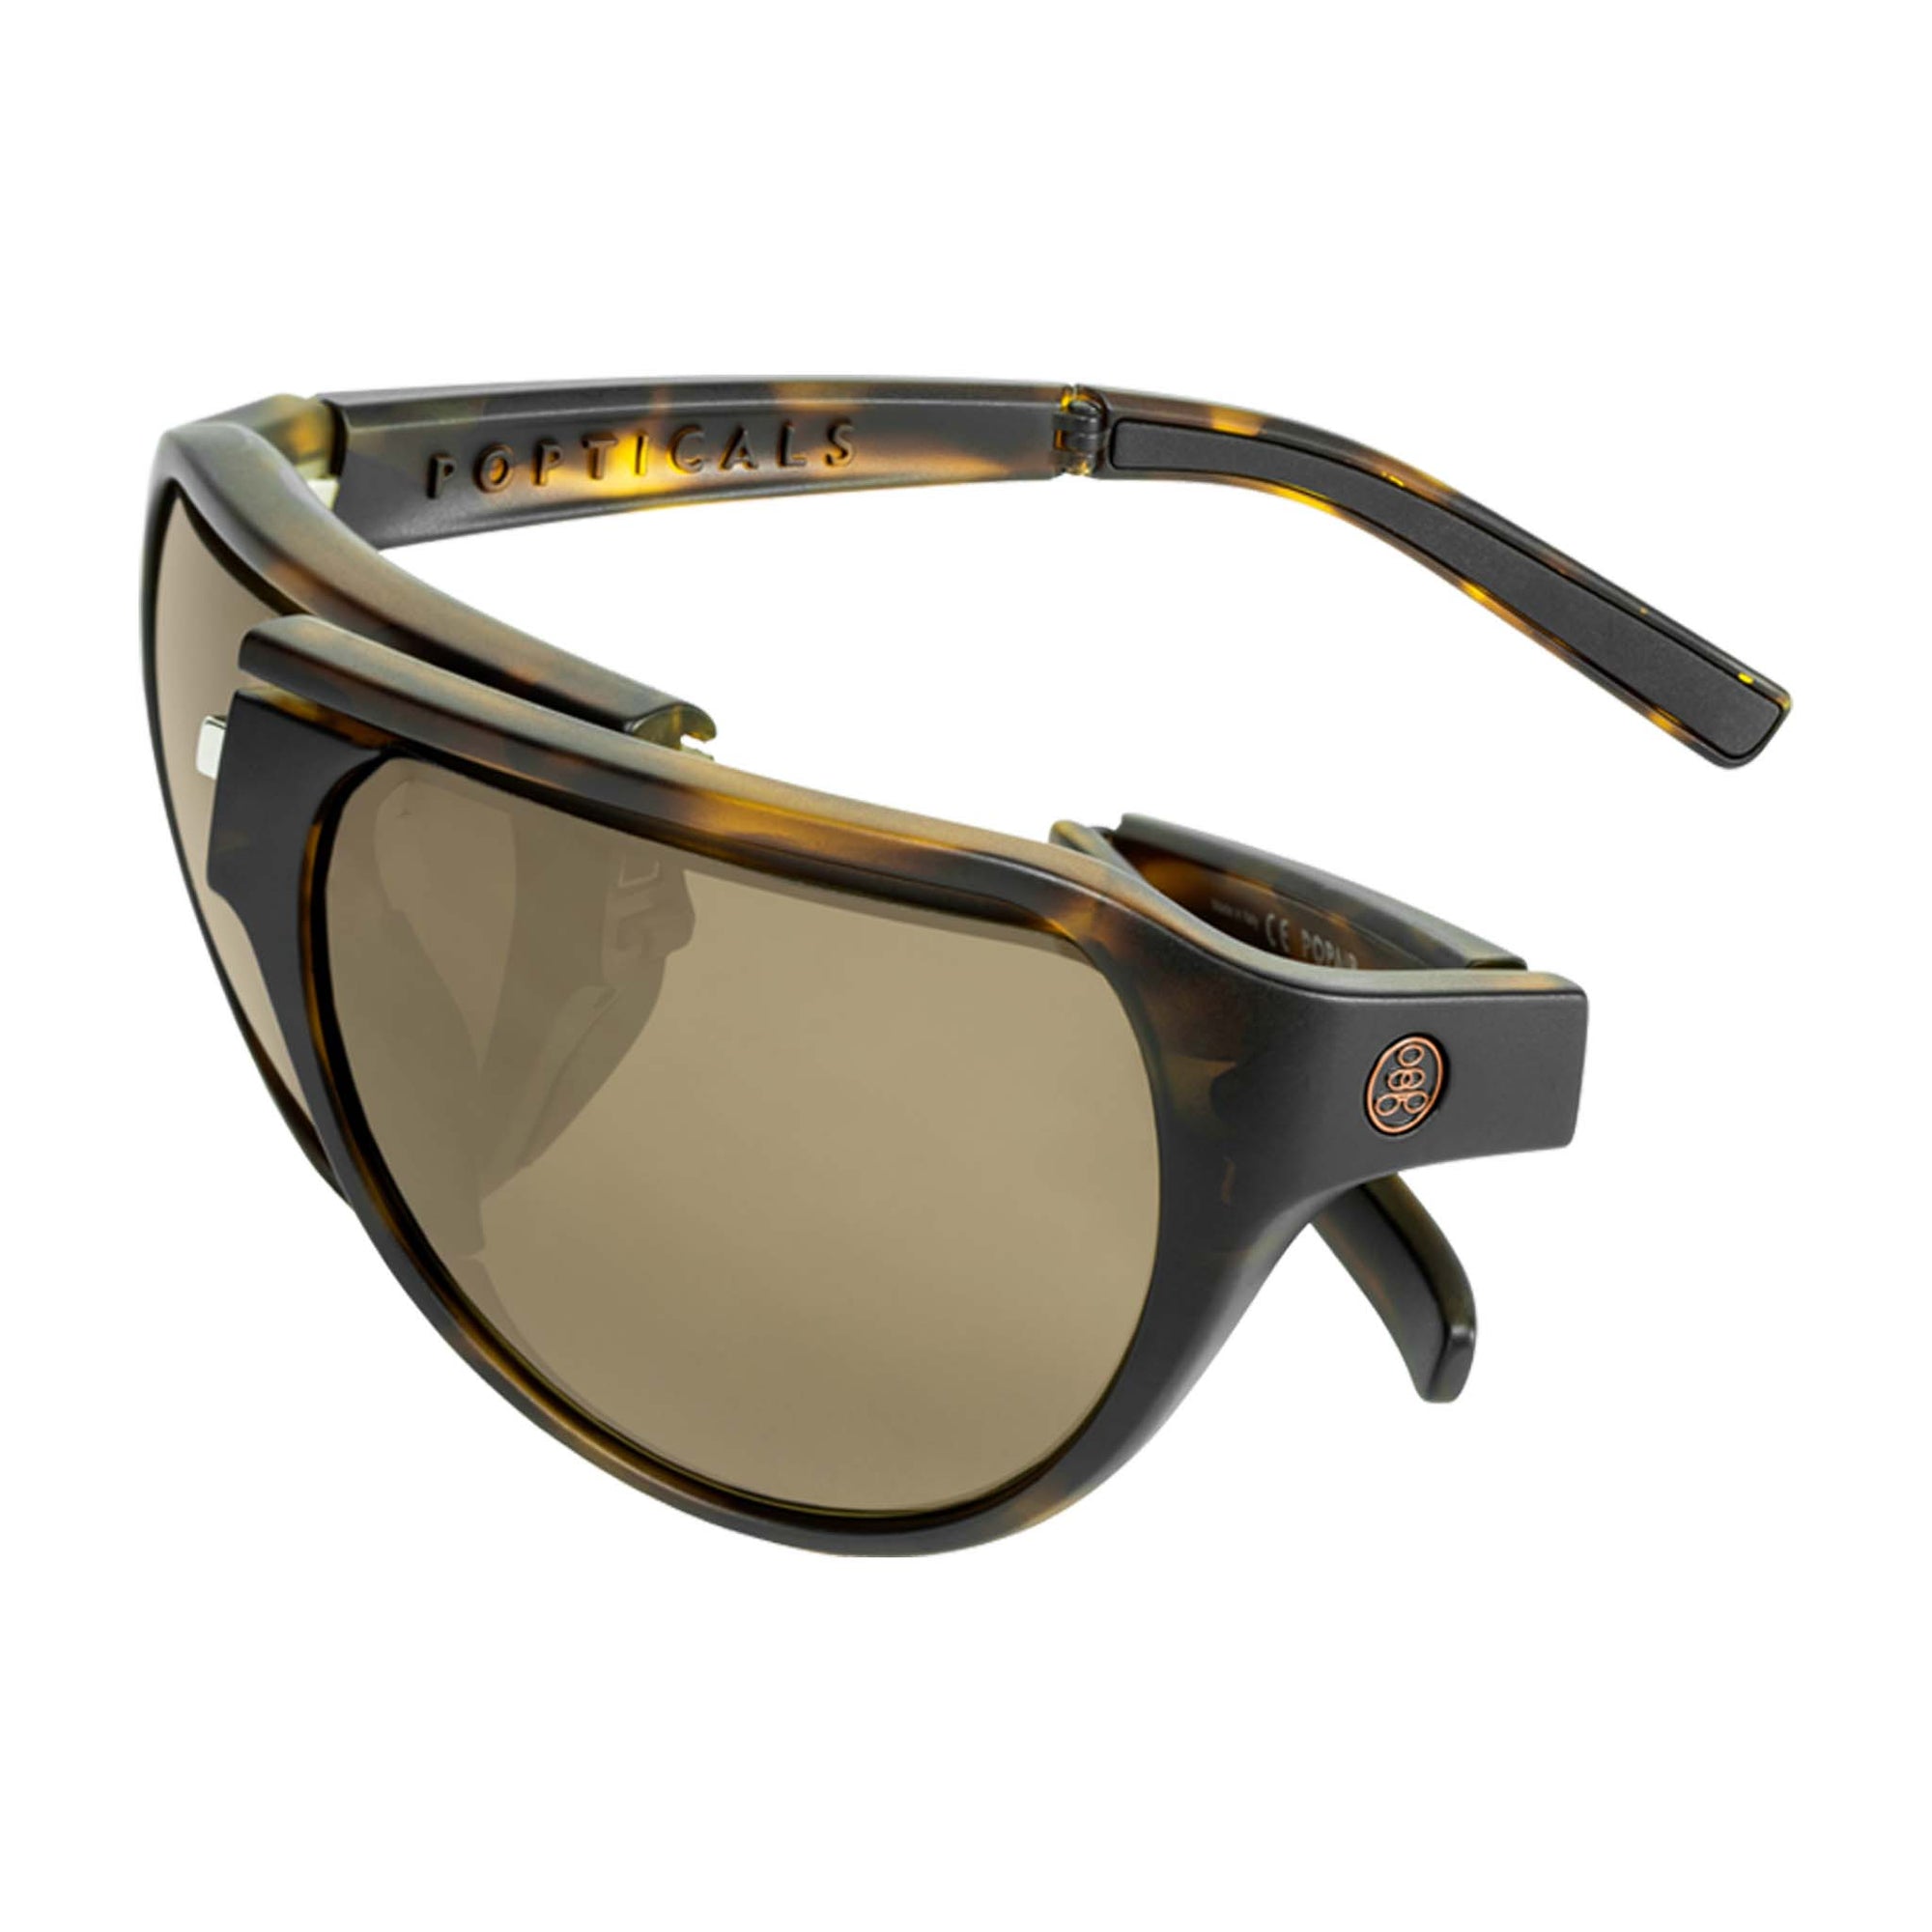 Popticals, Premium Compact Sunglasses, PopAir, 300010-CUNP, Polarized Sunglasses, Matte Tortoise Frame, Brown Lenses, Glam View